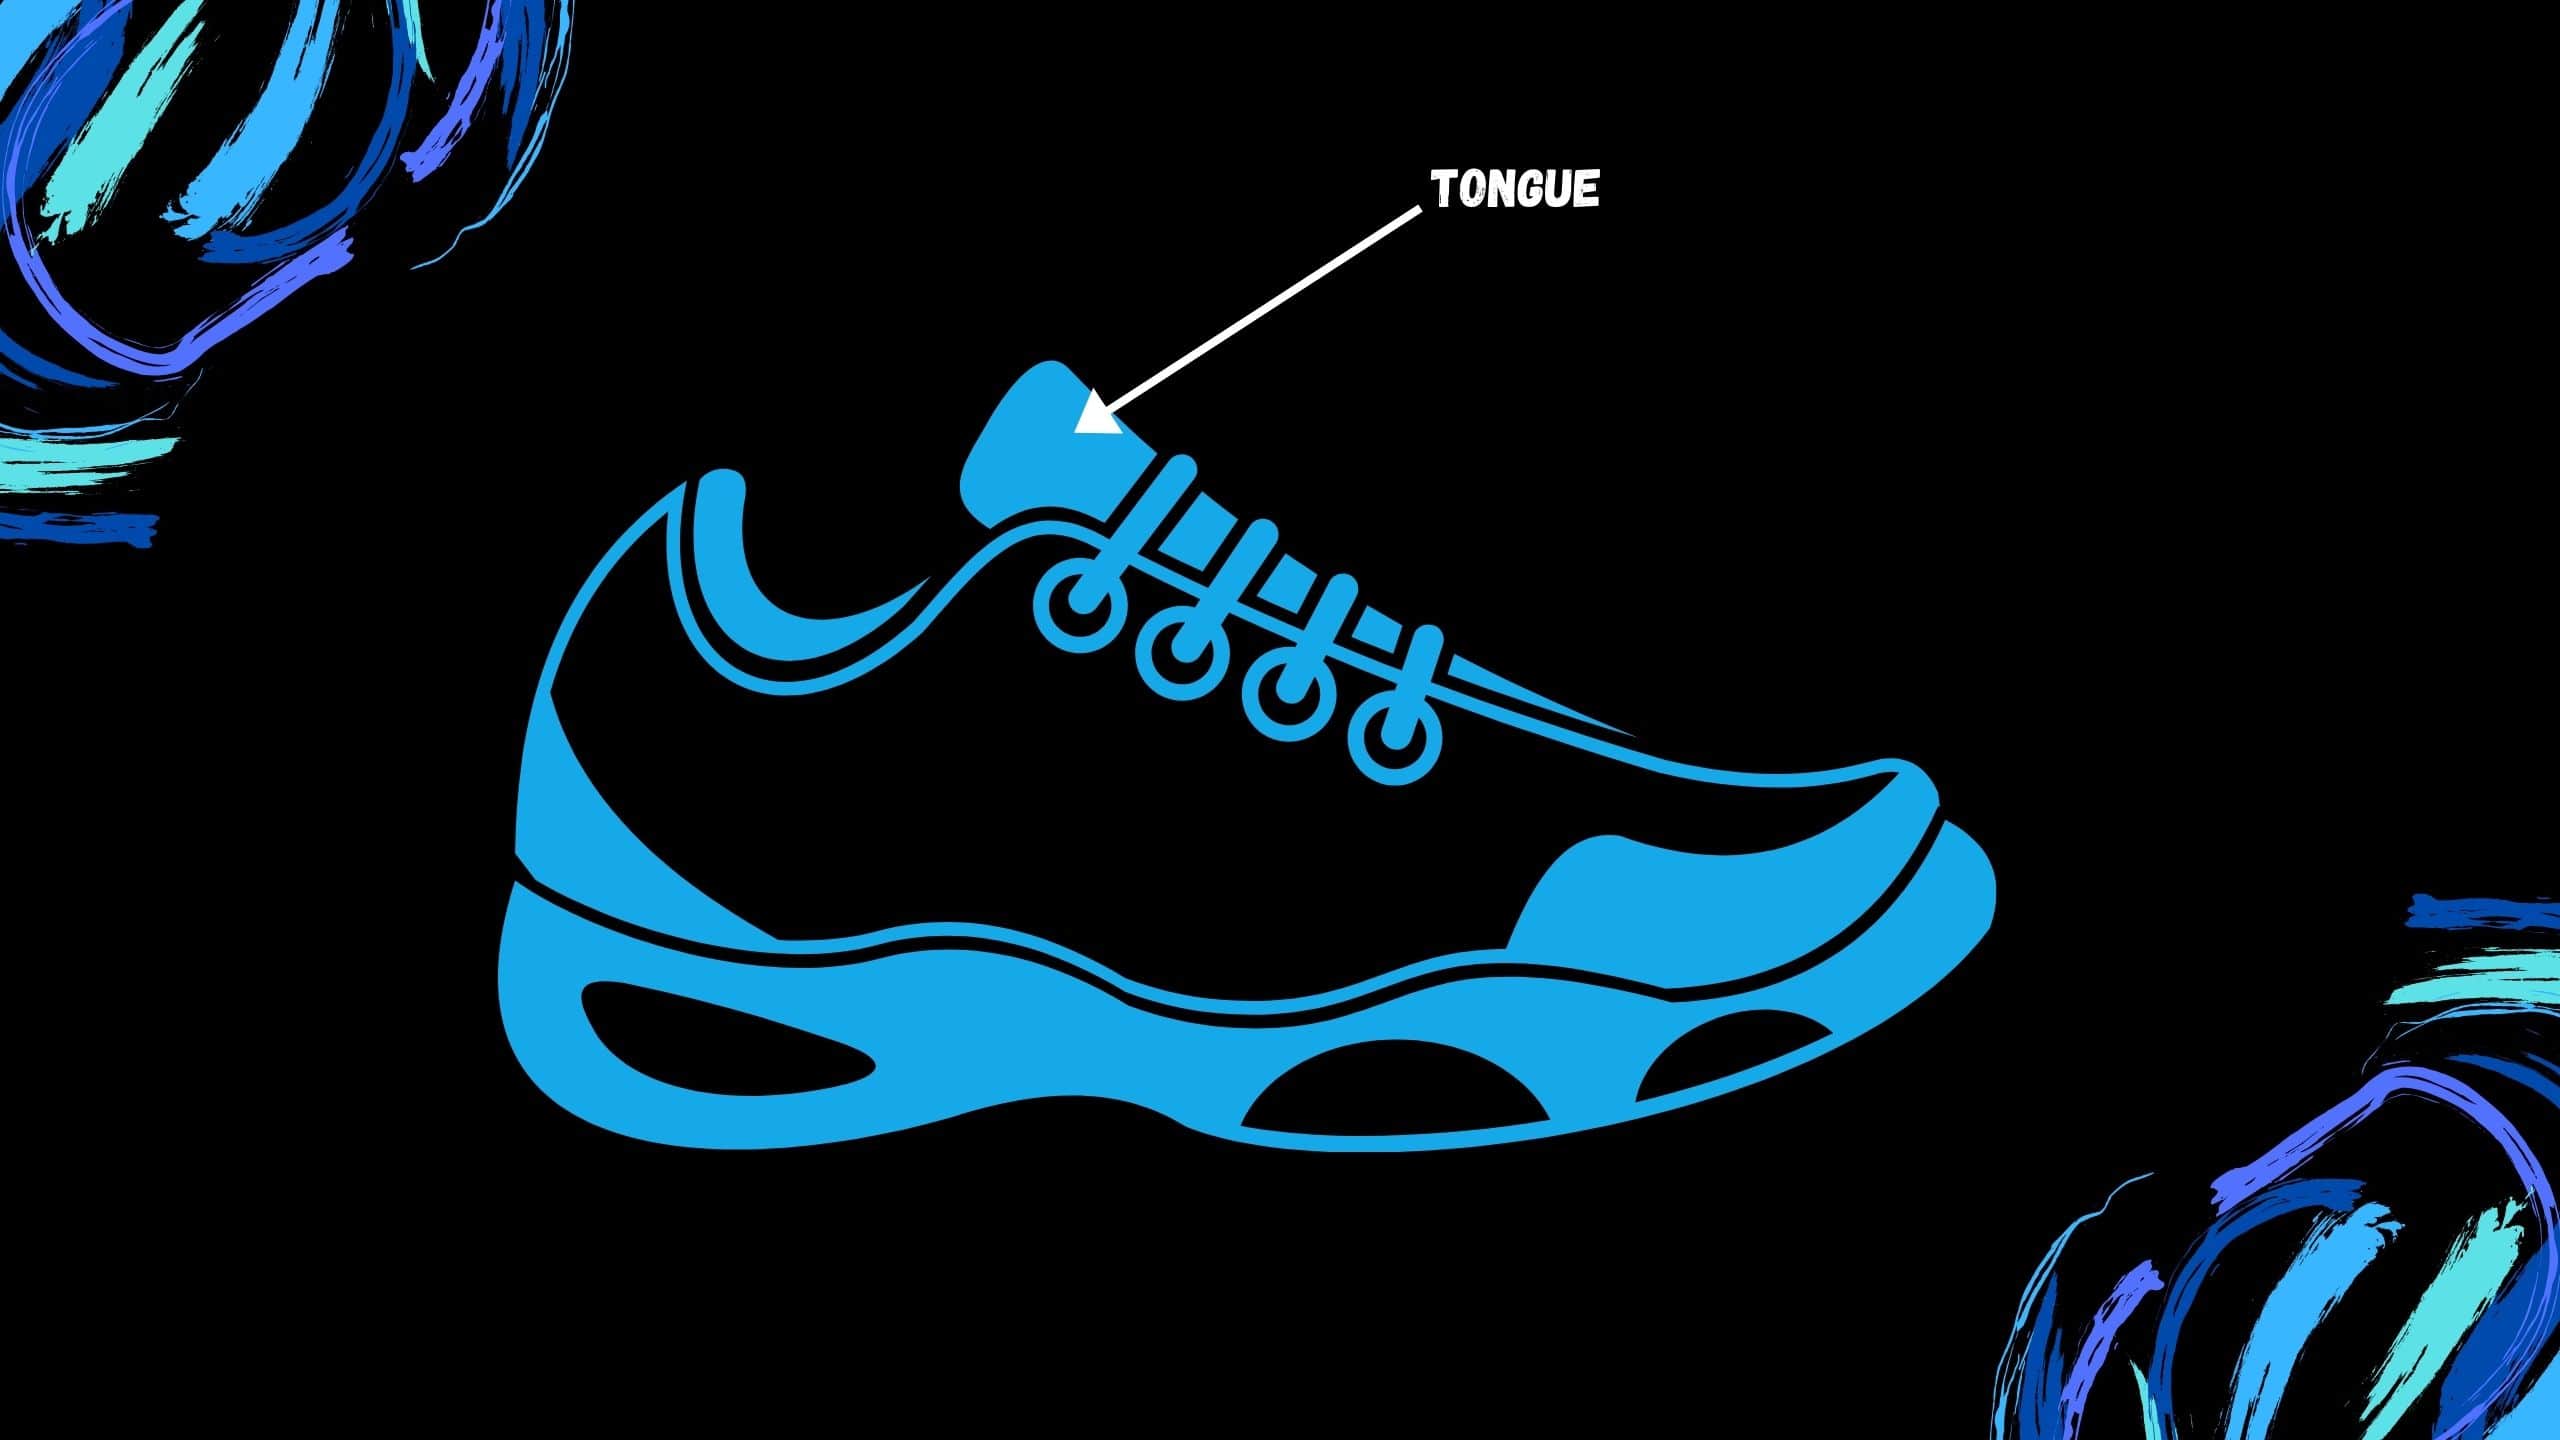 tennis shoes tongue